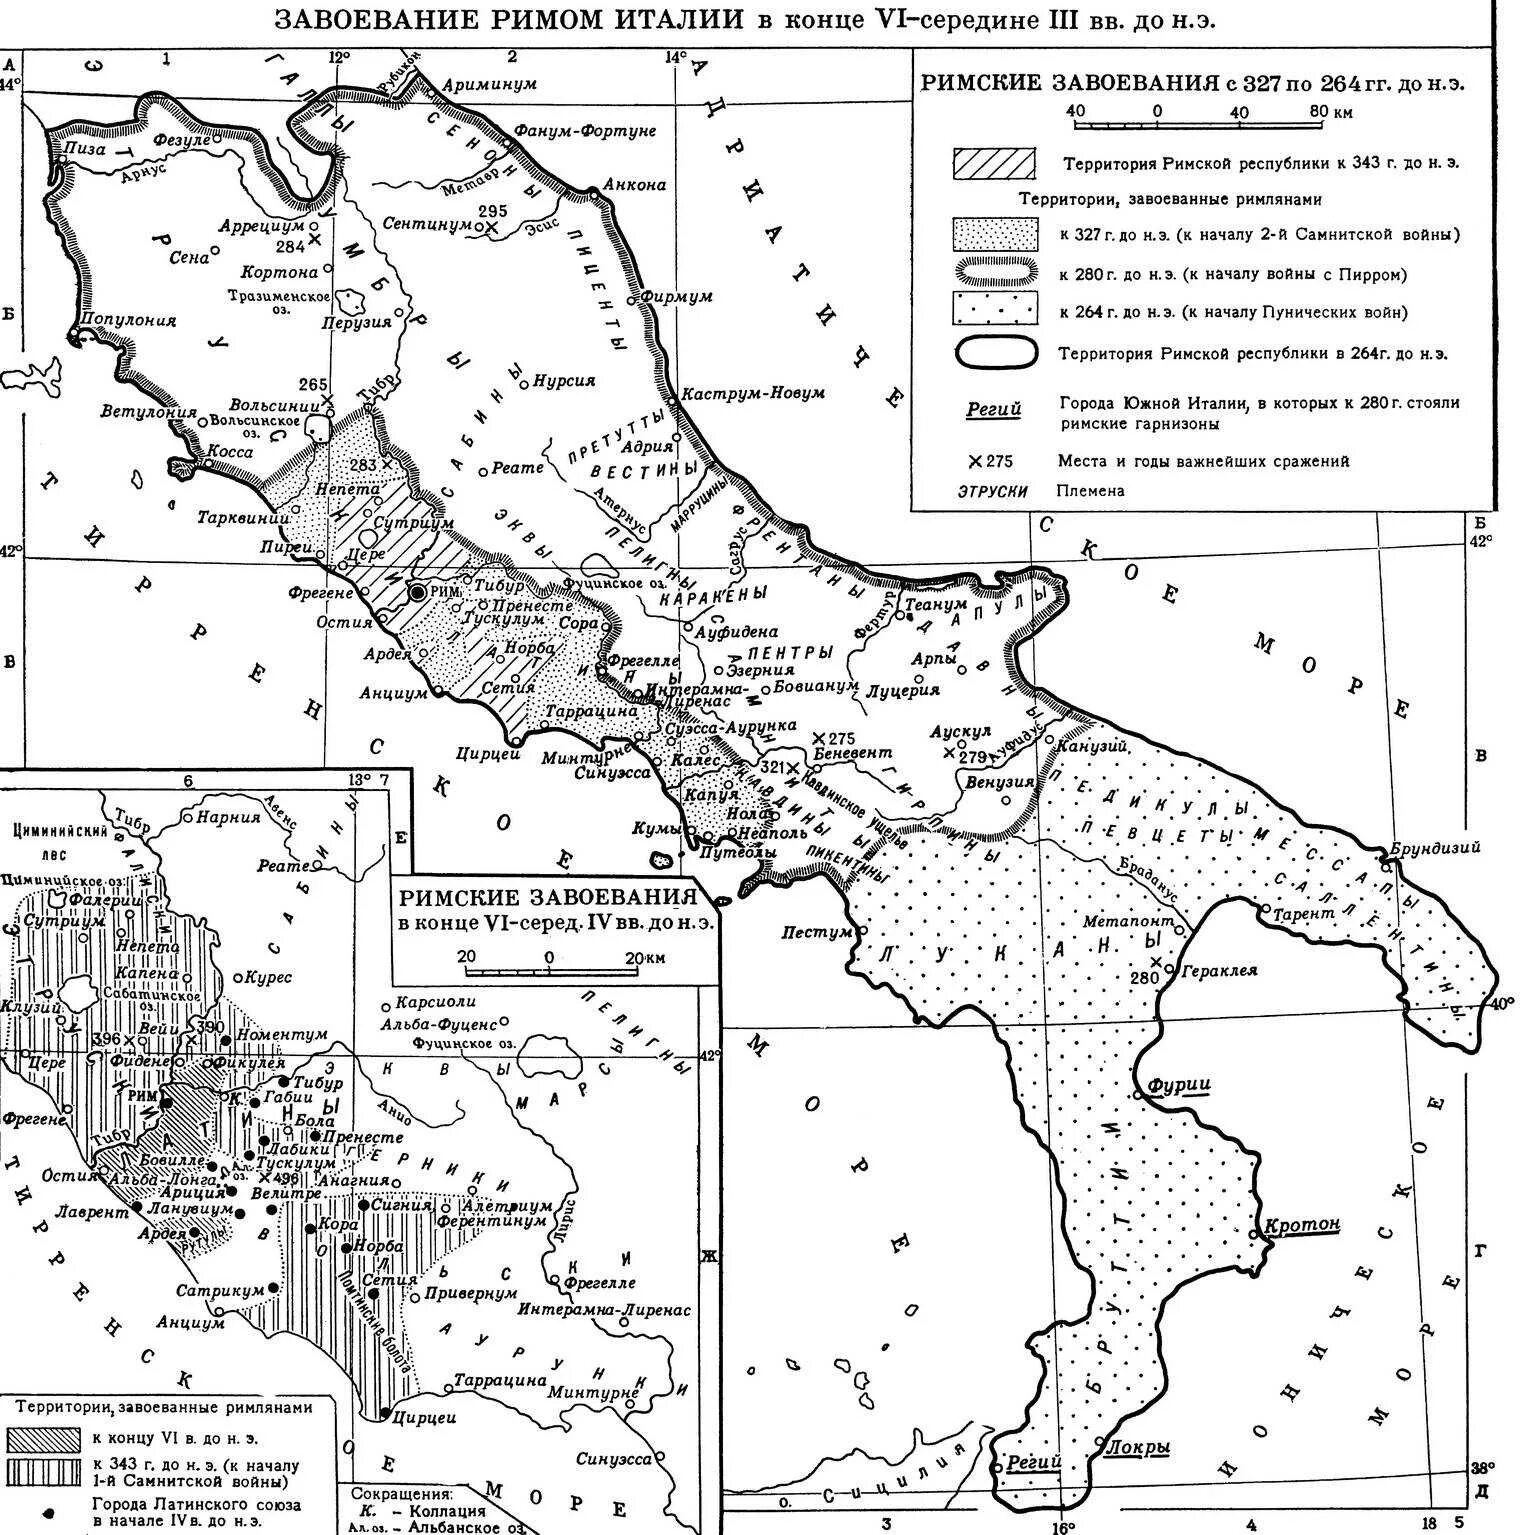 Италия древний Рим карта. Карта завоеваний древнего Рима в Италии. Древний Рим завоевание Италии. Карта завоеваний римской Республики.